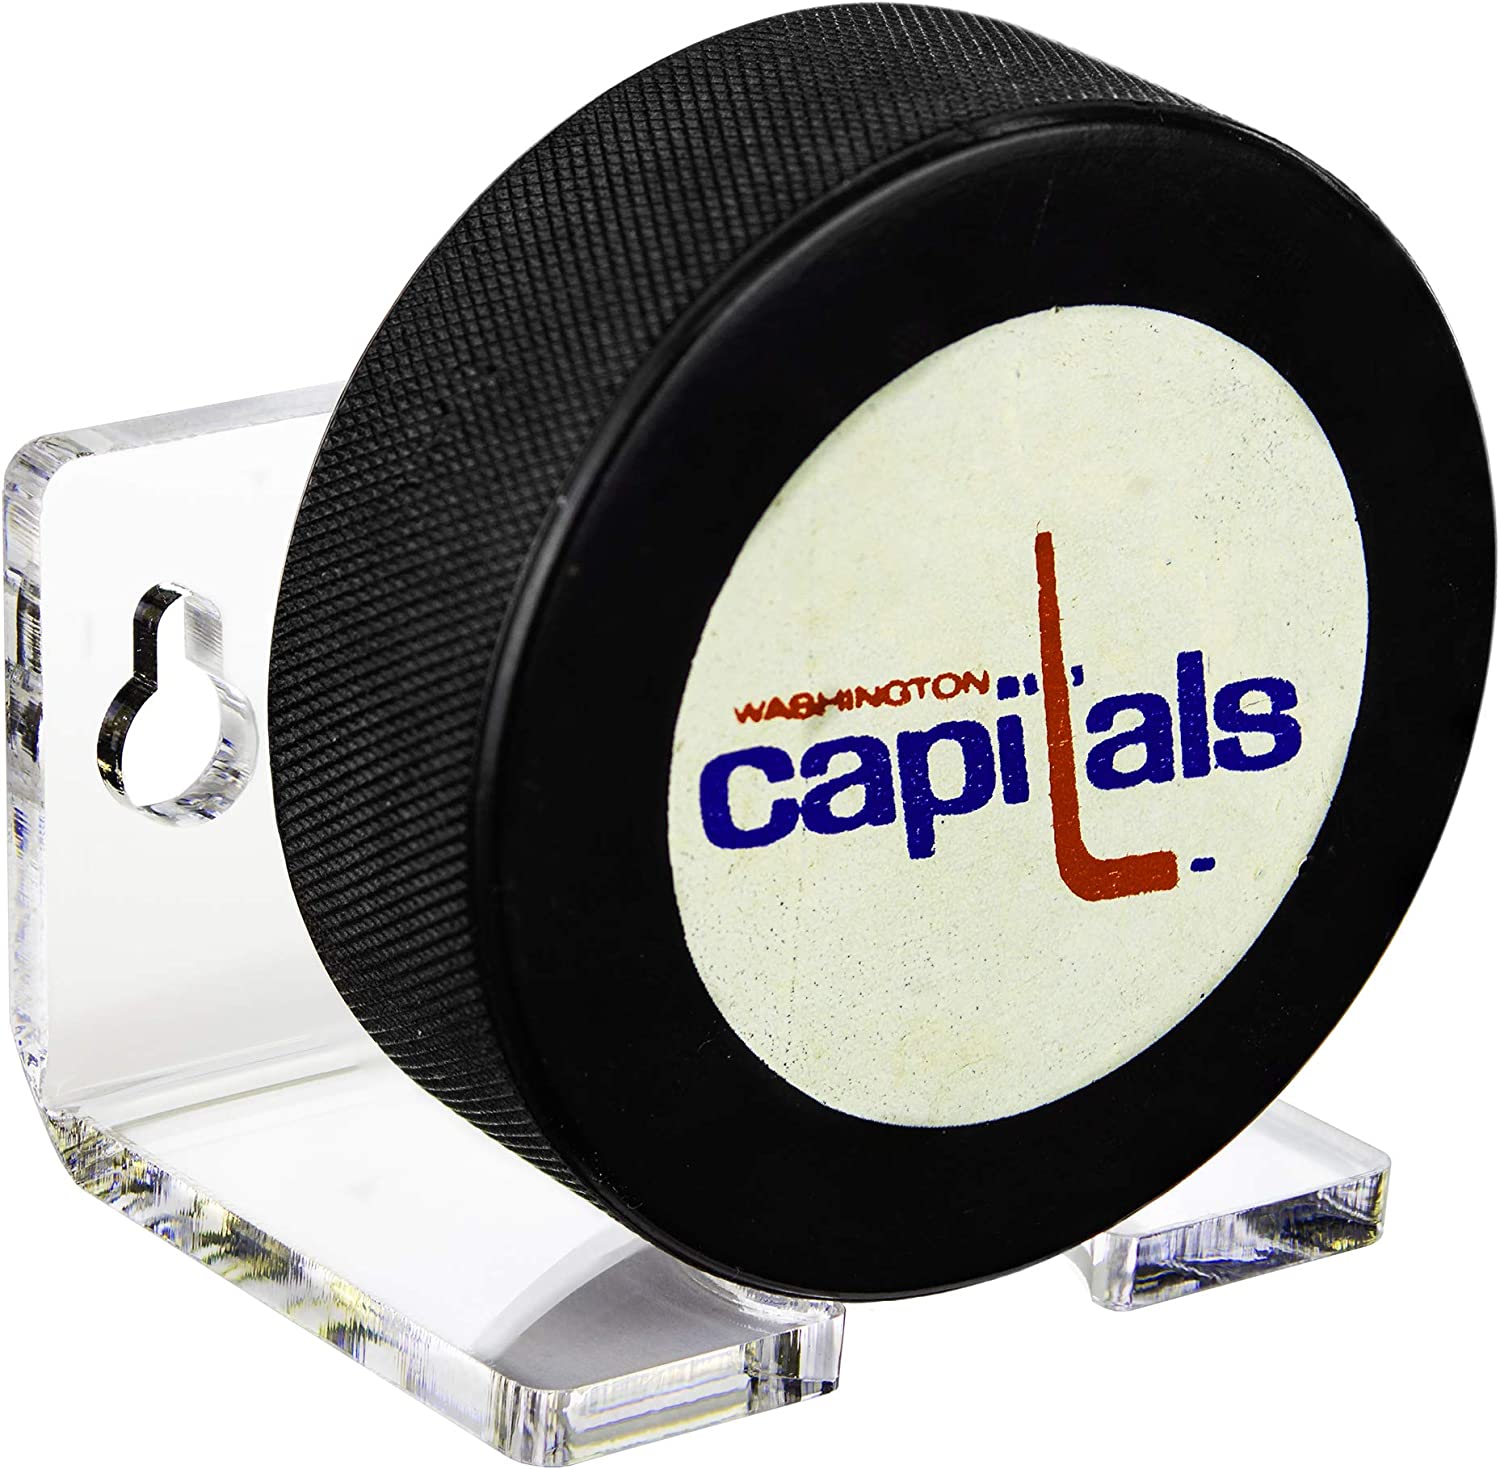 Washington Capitals Electronics, Capitals Bluetooth Speakers